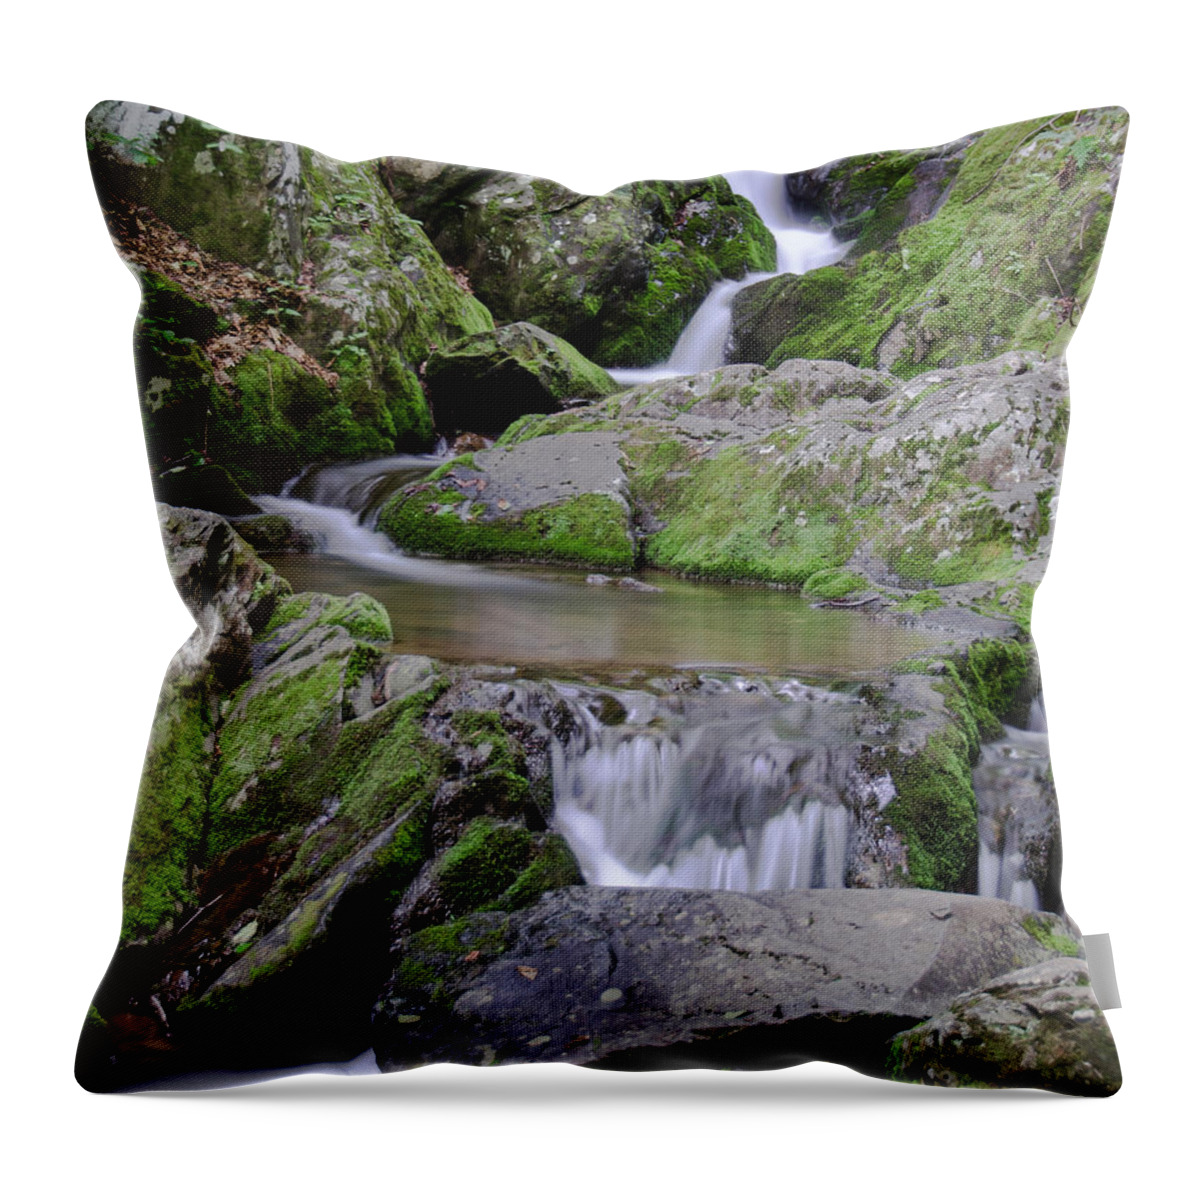 Water Falls Throw Pillow featuring the photograph Dark Hollow Falls by Jaime Mercado